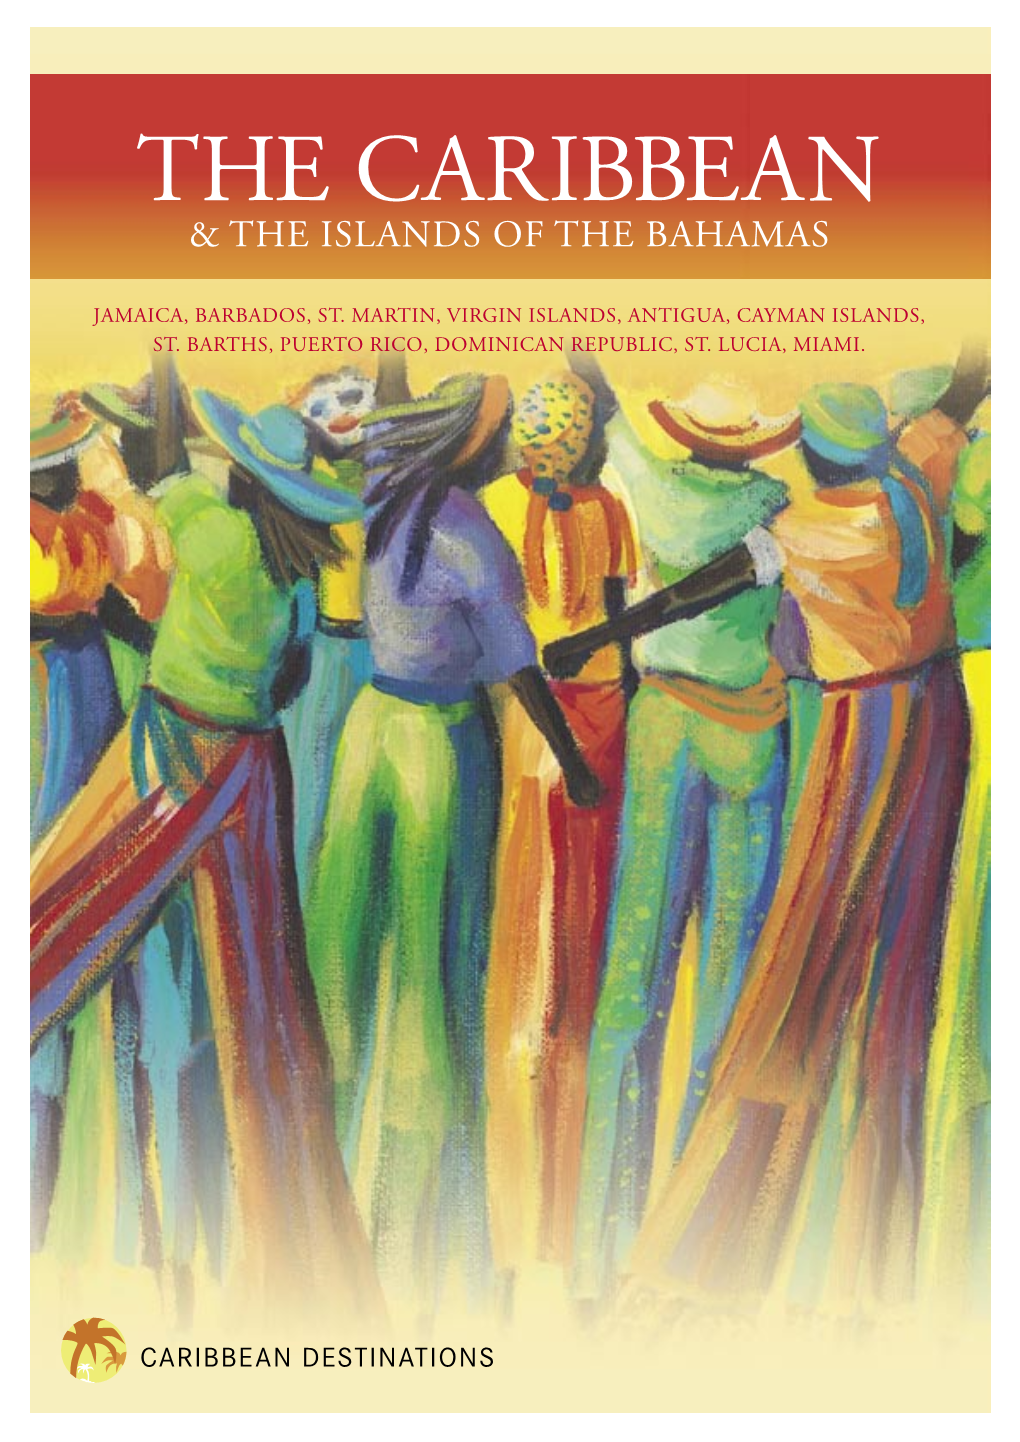 The Caribbean & the Islands of the Bahamas